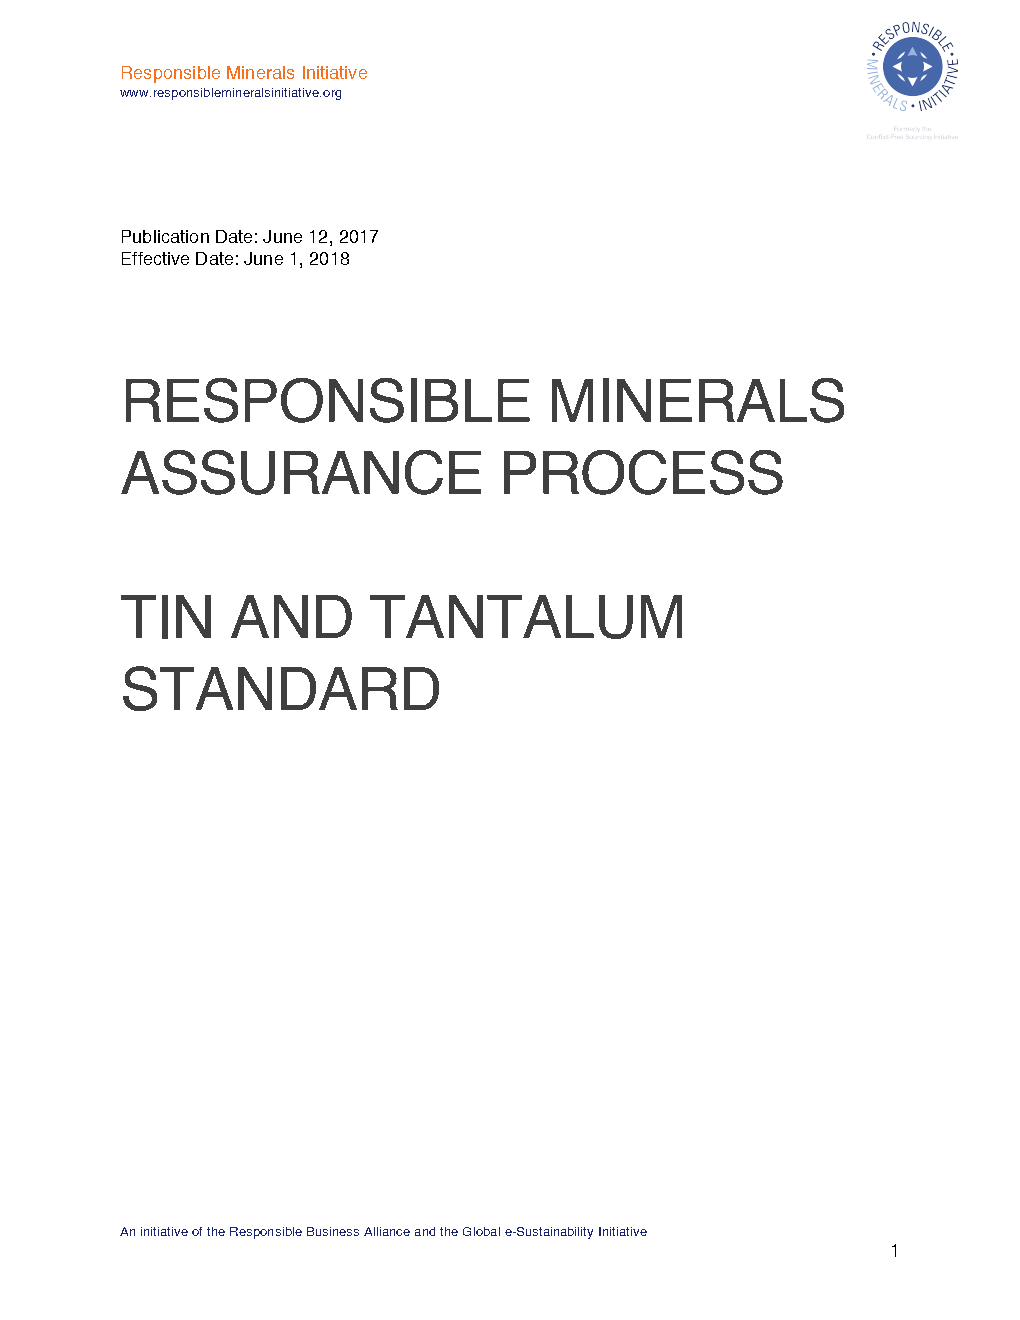 RESPONSIBLE MINERALS ASSURANCE PROCESS TIN AND TANTALUM STANDARD